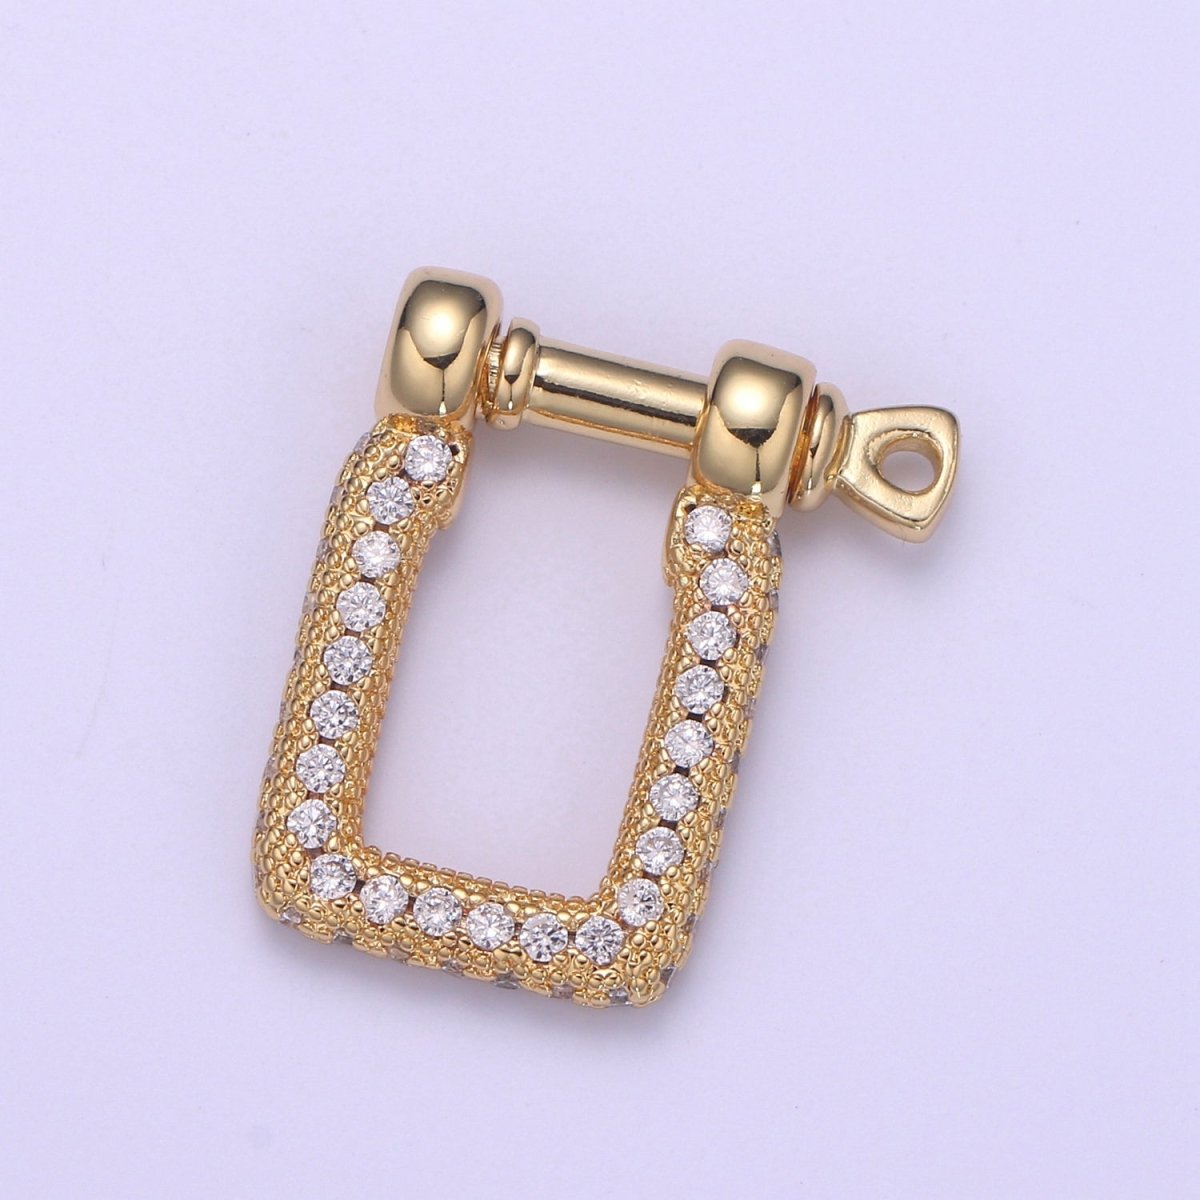 Micor pave Clasp Gold Filled Screw clasp lock, Anchor Shackle, Gold Rectangle Cz Bracelet Necklace Clasp Sailor Bracelet Clasp Supply L-259 - DLUXCA